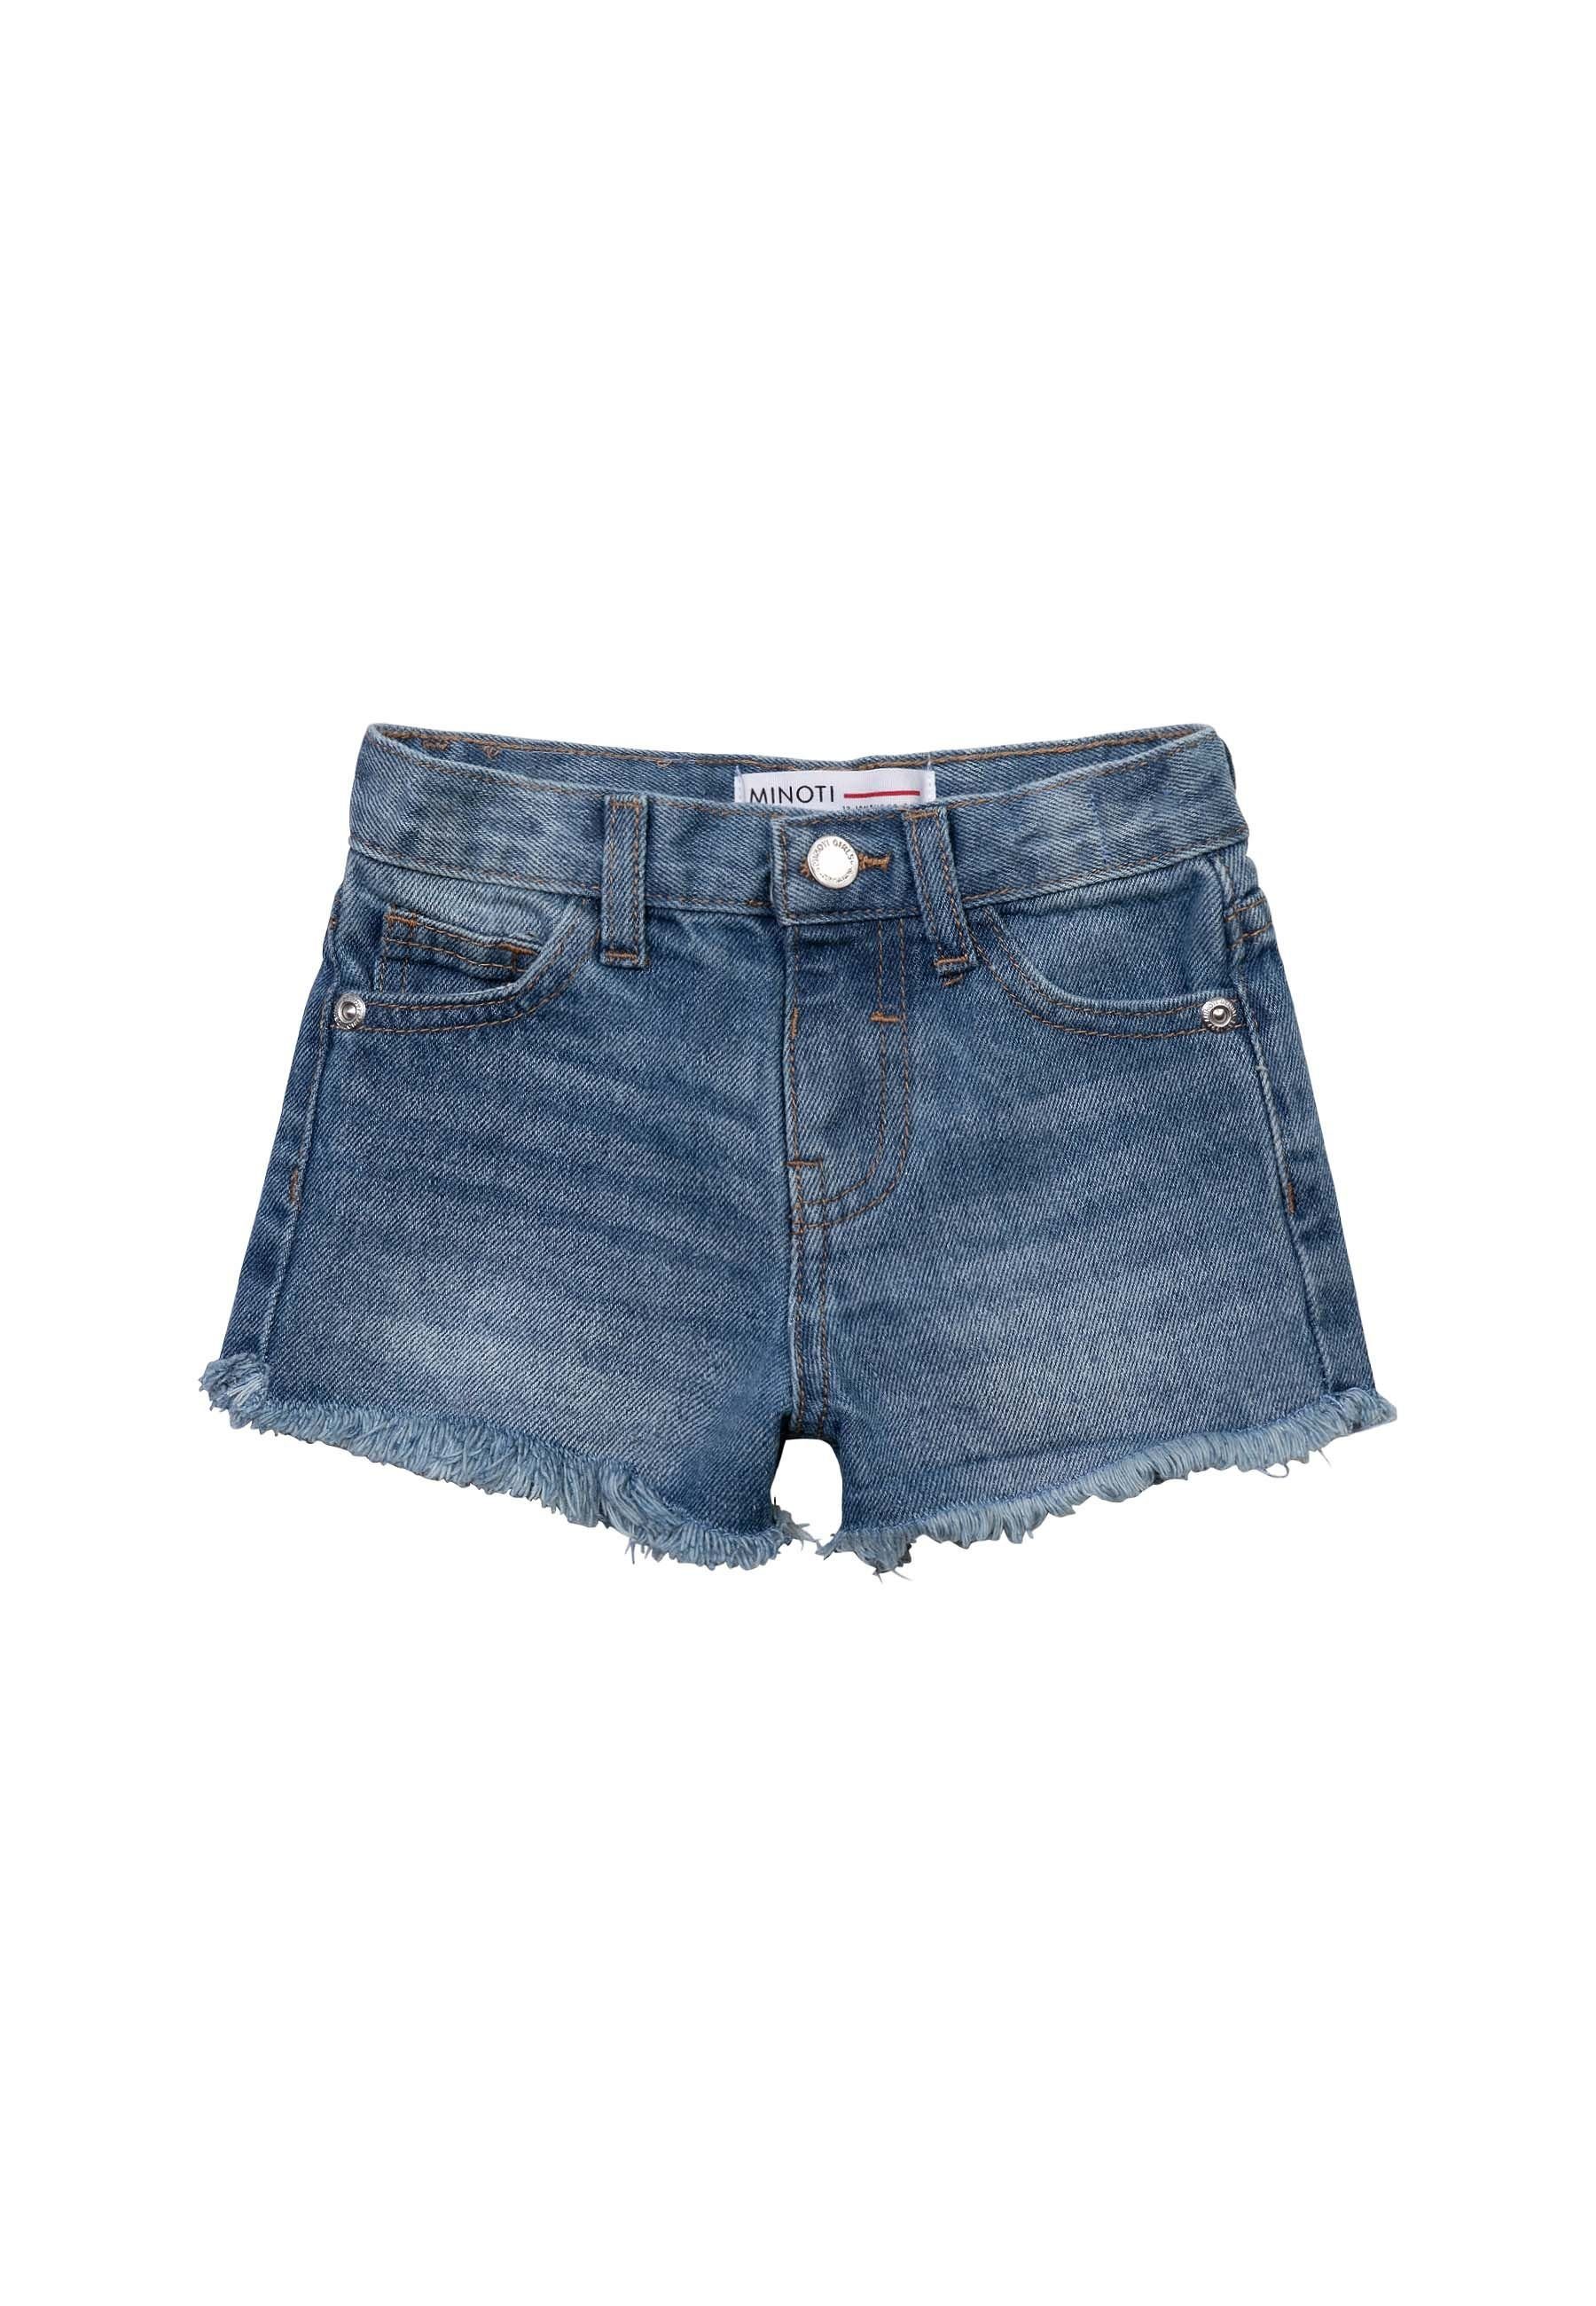 MINOTI Jeansshorts Kurze Jeans Shorts (1y-14y) Denim-Blau